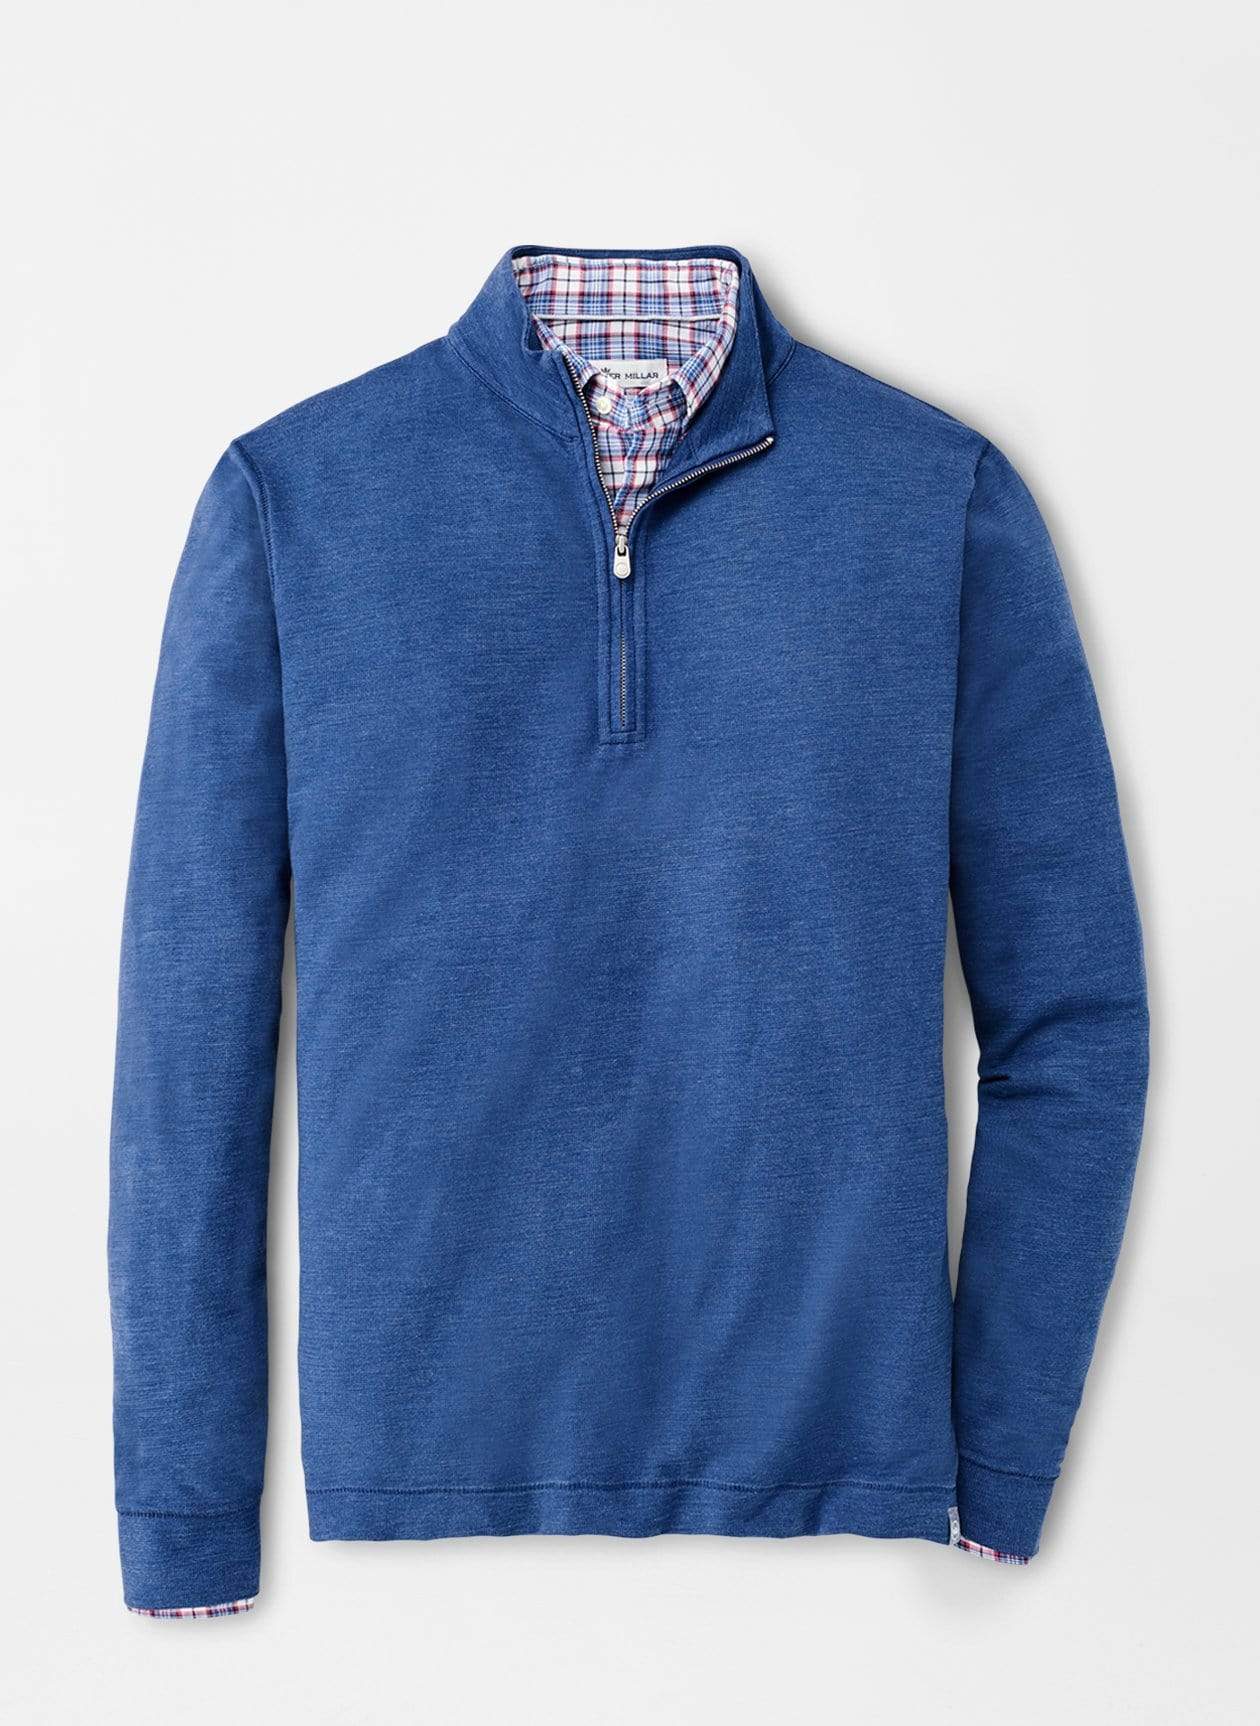  Blue Peter Millar, Men's Seaside Slub Quarter-Zip Sweater (Blue)